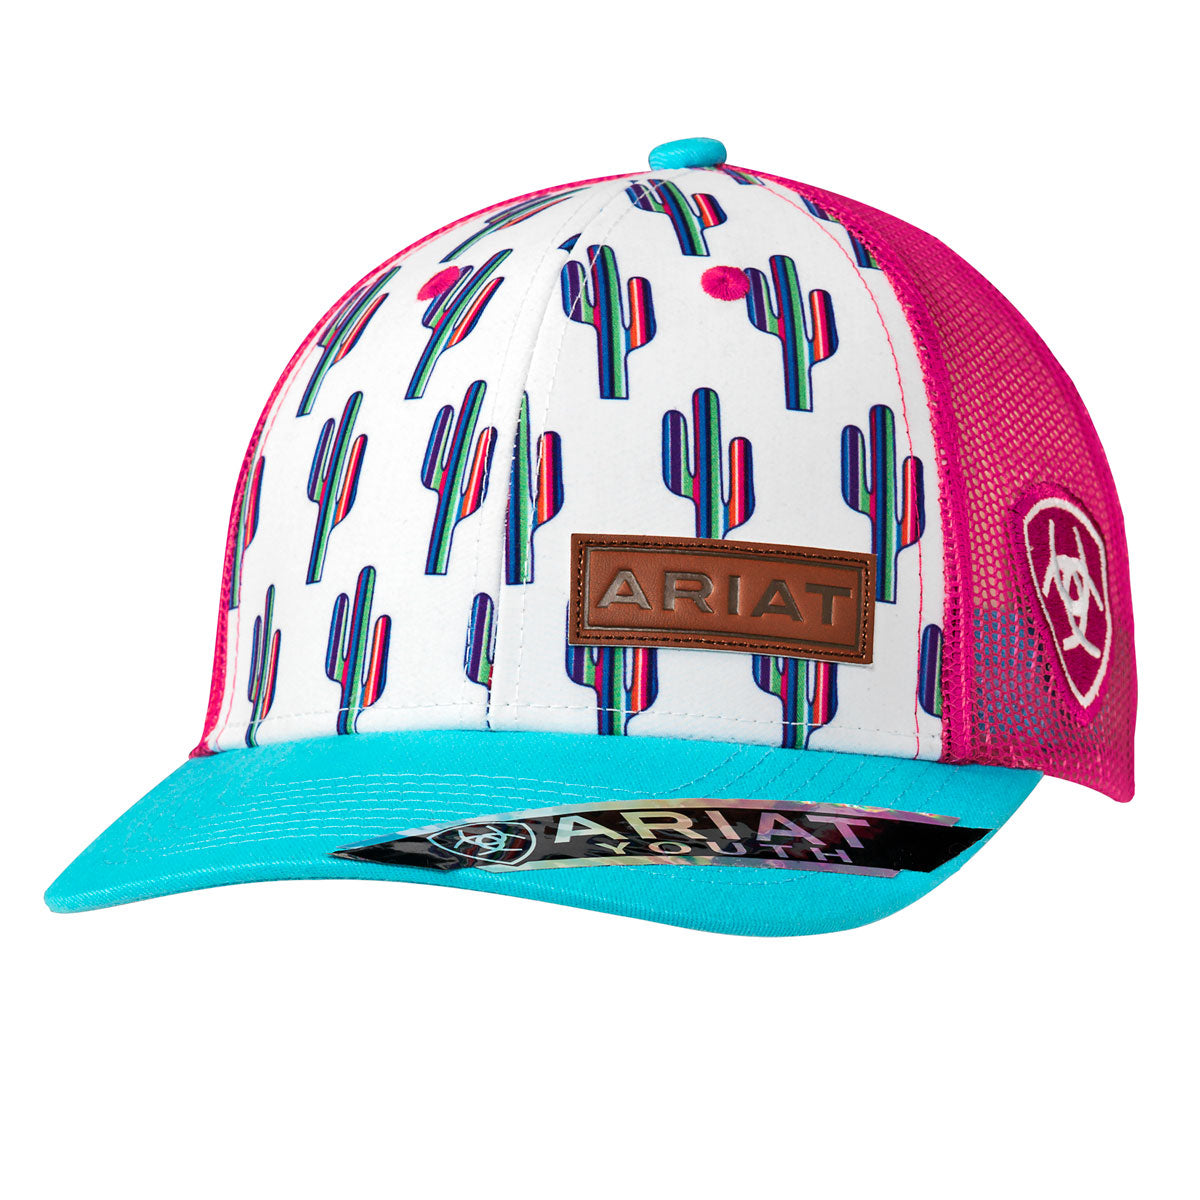 Ariat Youth Mesh Snapback Cap - Multi-Colored Cactus Print